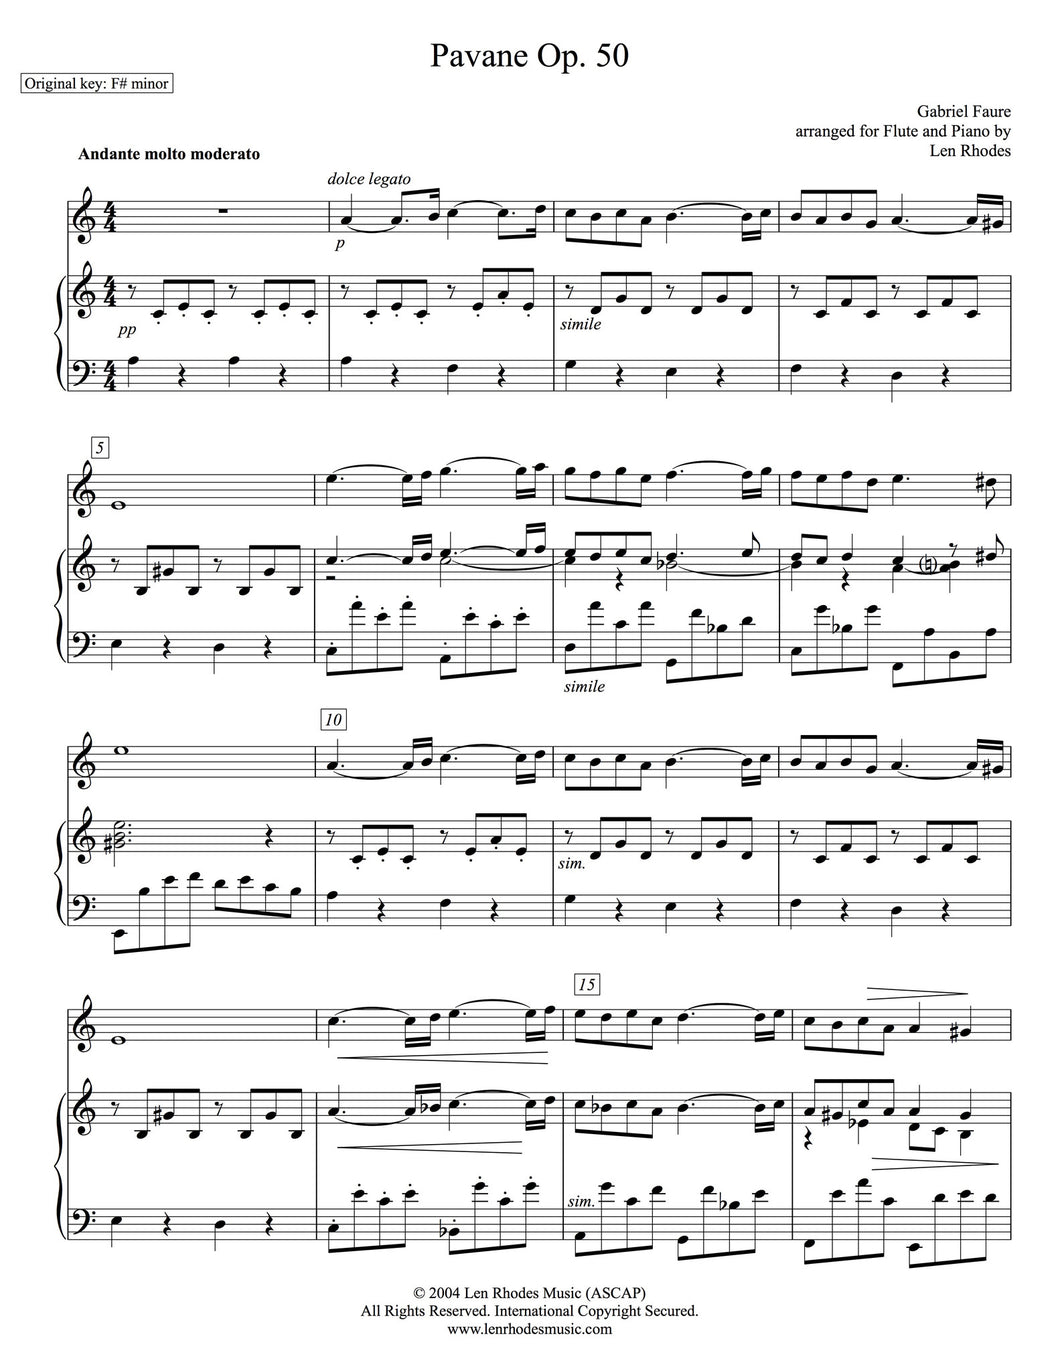 Pavane op.50  Fauré  - Flute and Piano